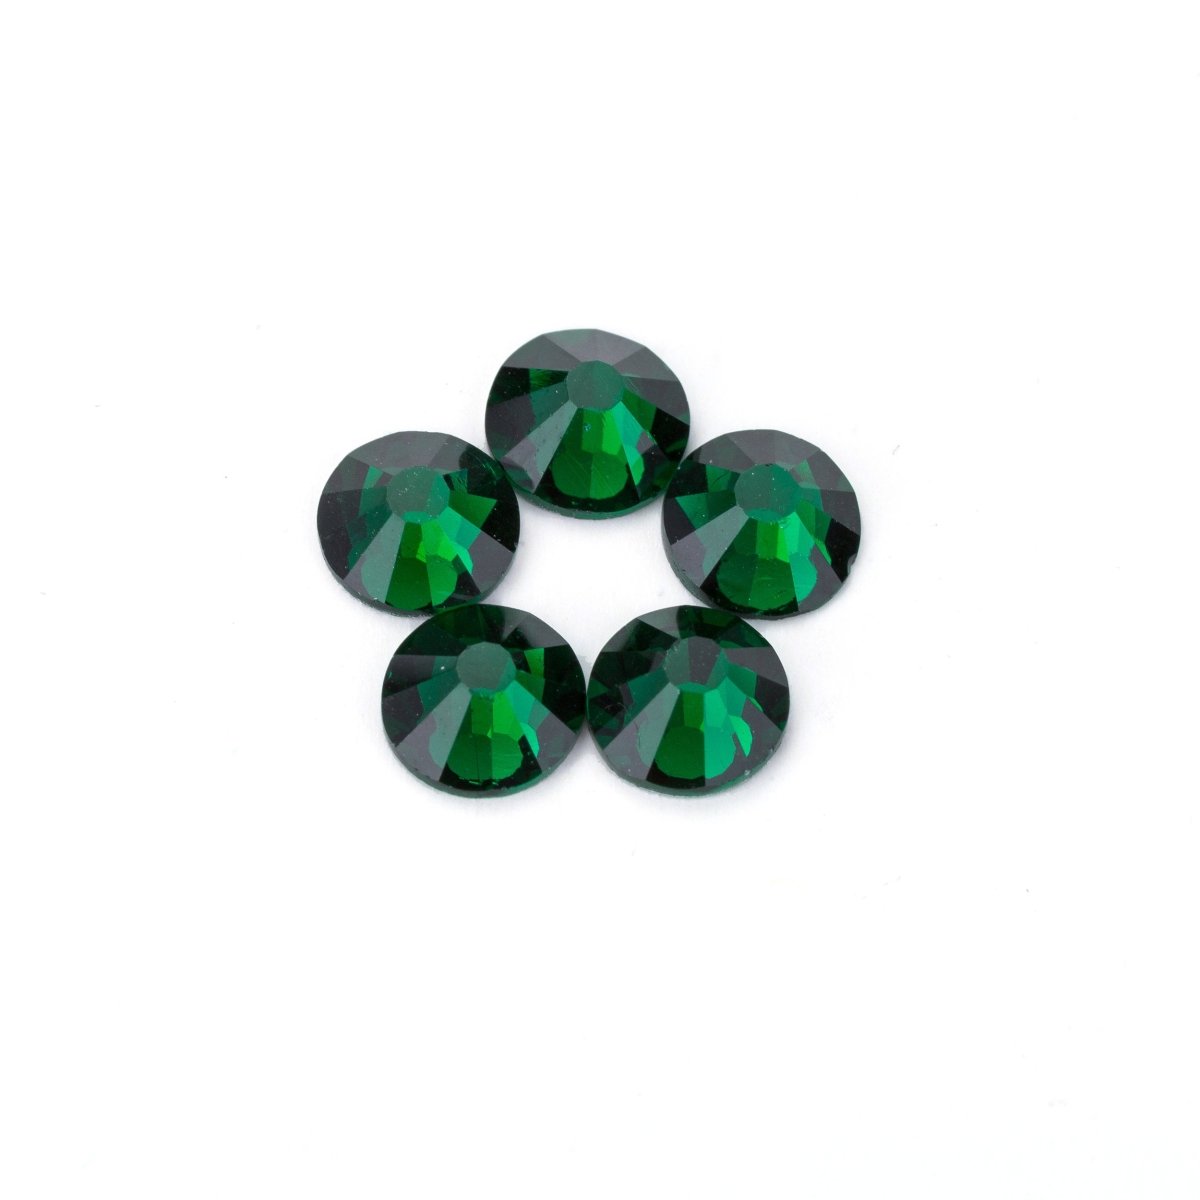 1440 pcs High Quality Crystal Dark Green Emerald Rhinestones Loose Crystal flat back No Hot Fix glass bead Size ss 10/ ss 12/ ss 16 / ss 20 - DLUXCA